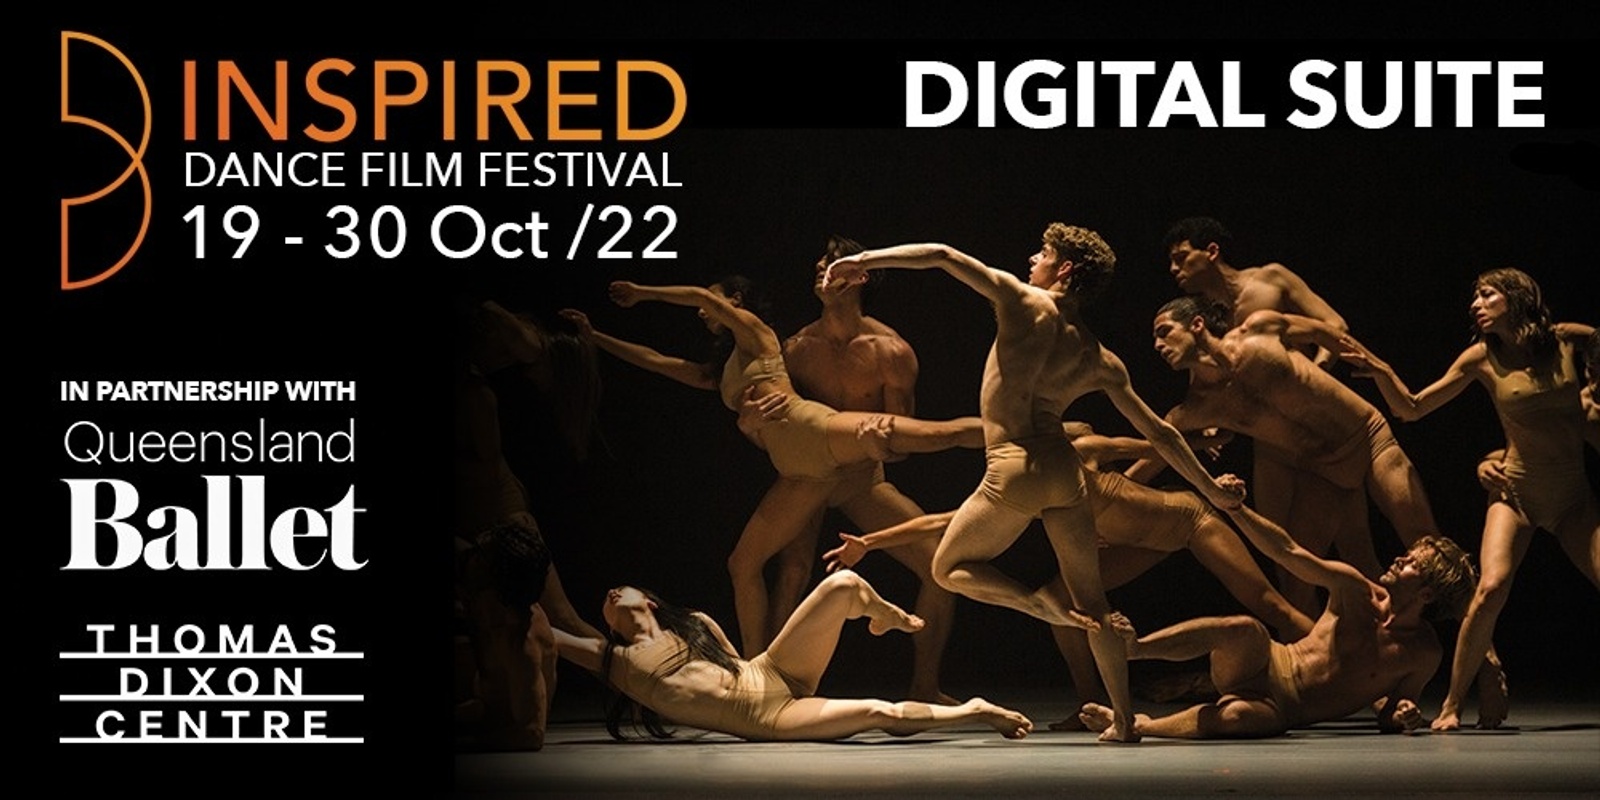 Banner image for Inspired Dance Film Festival 2022 Digital Suite